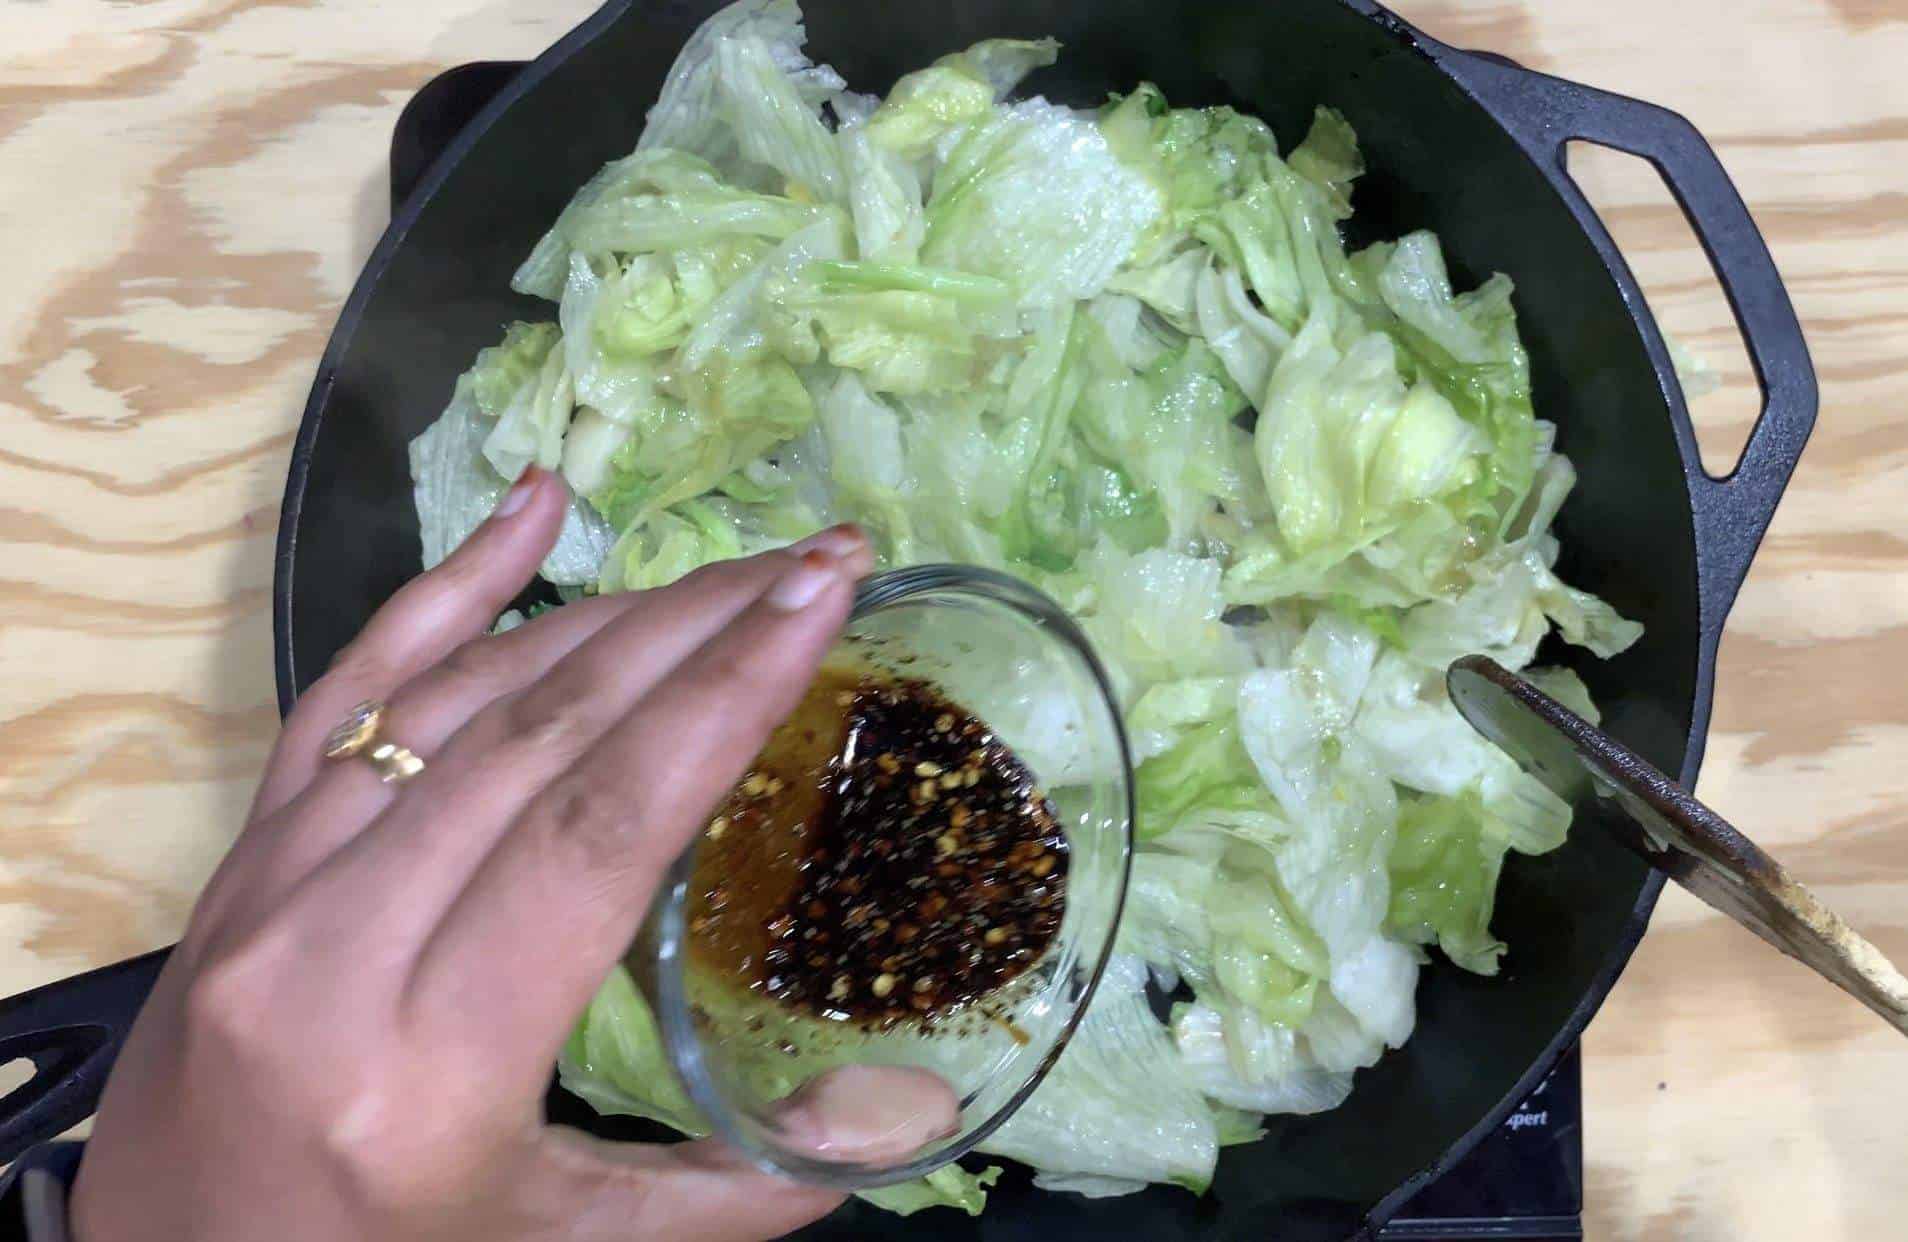 Adding sauce to lettuce stir fry